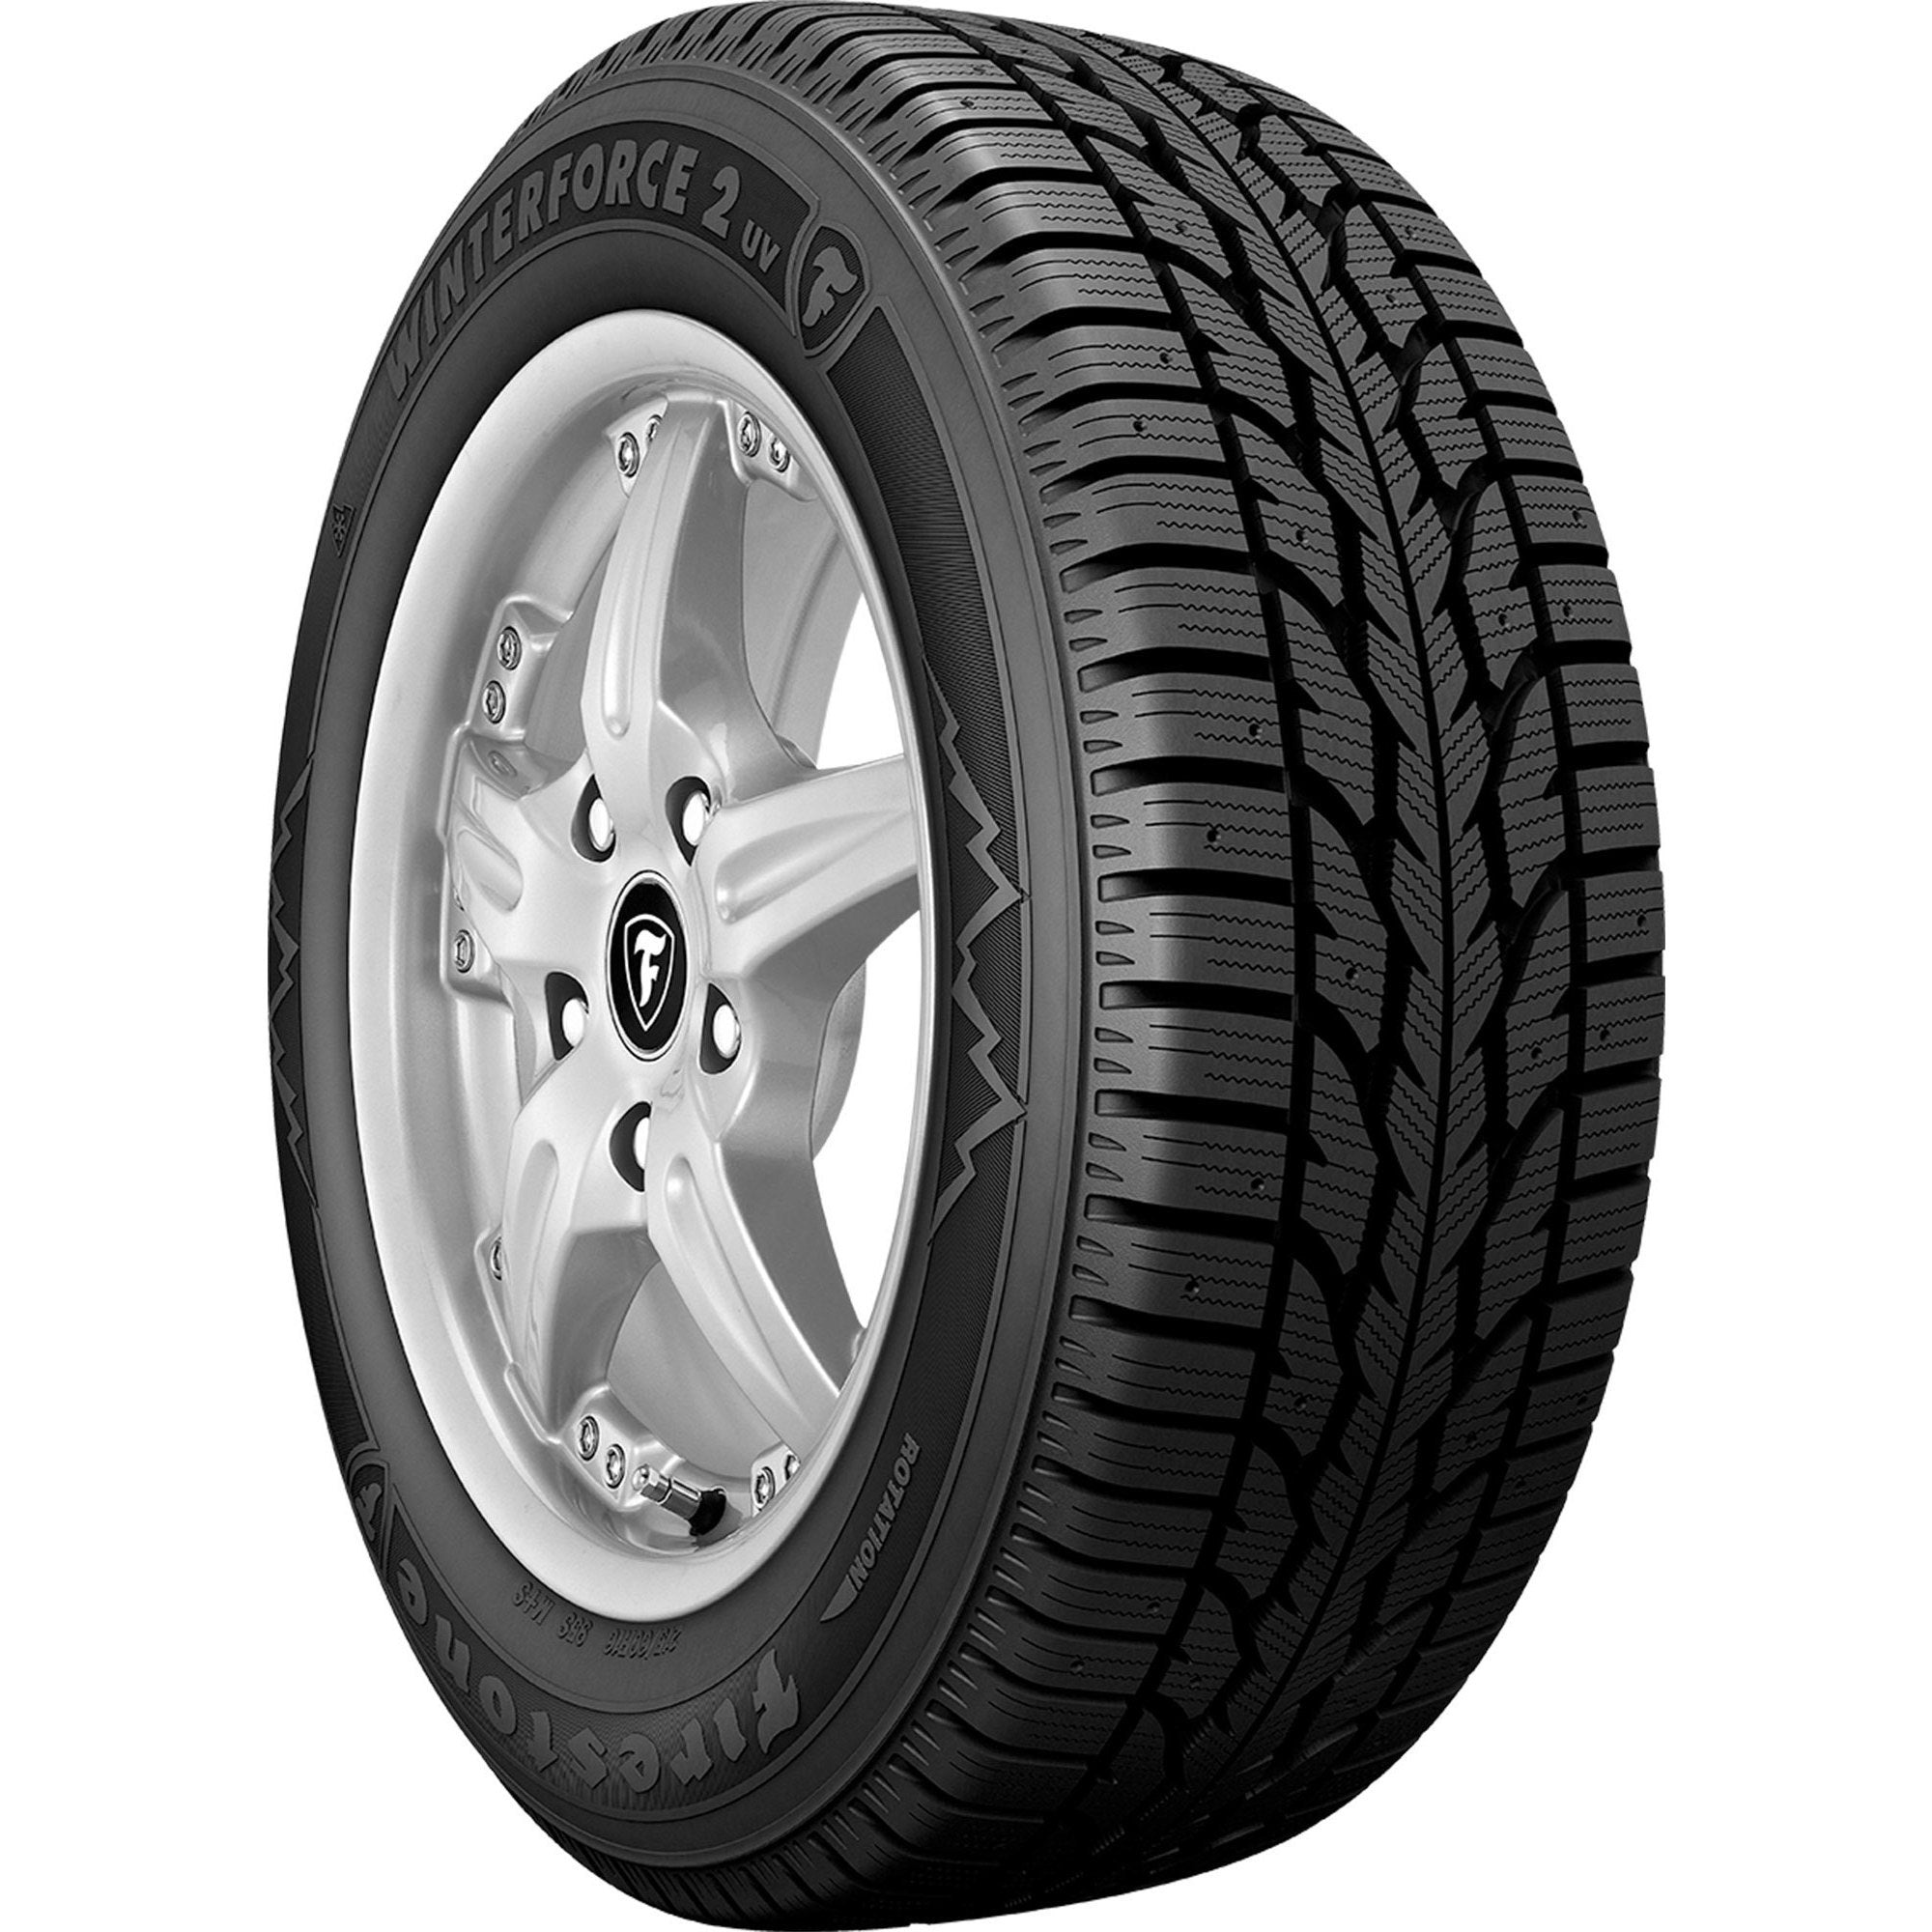 FIRESTONE WINTERFORCE2 UV 225/70R16 (28.4X8.9R 16) Tires